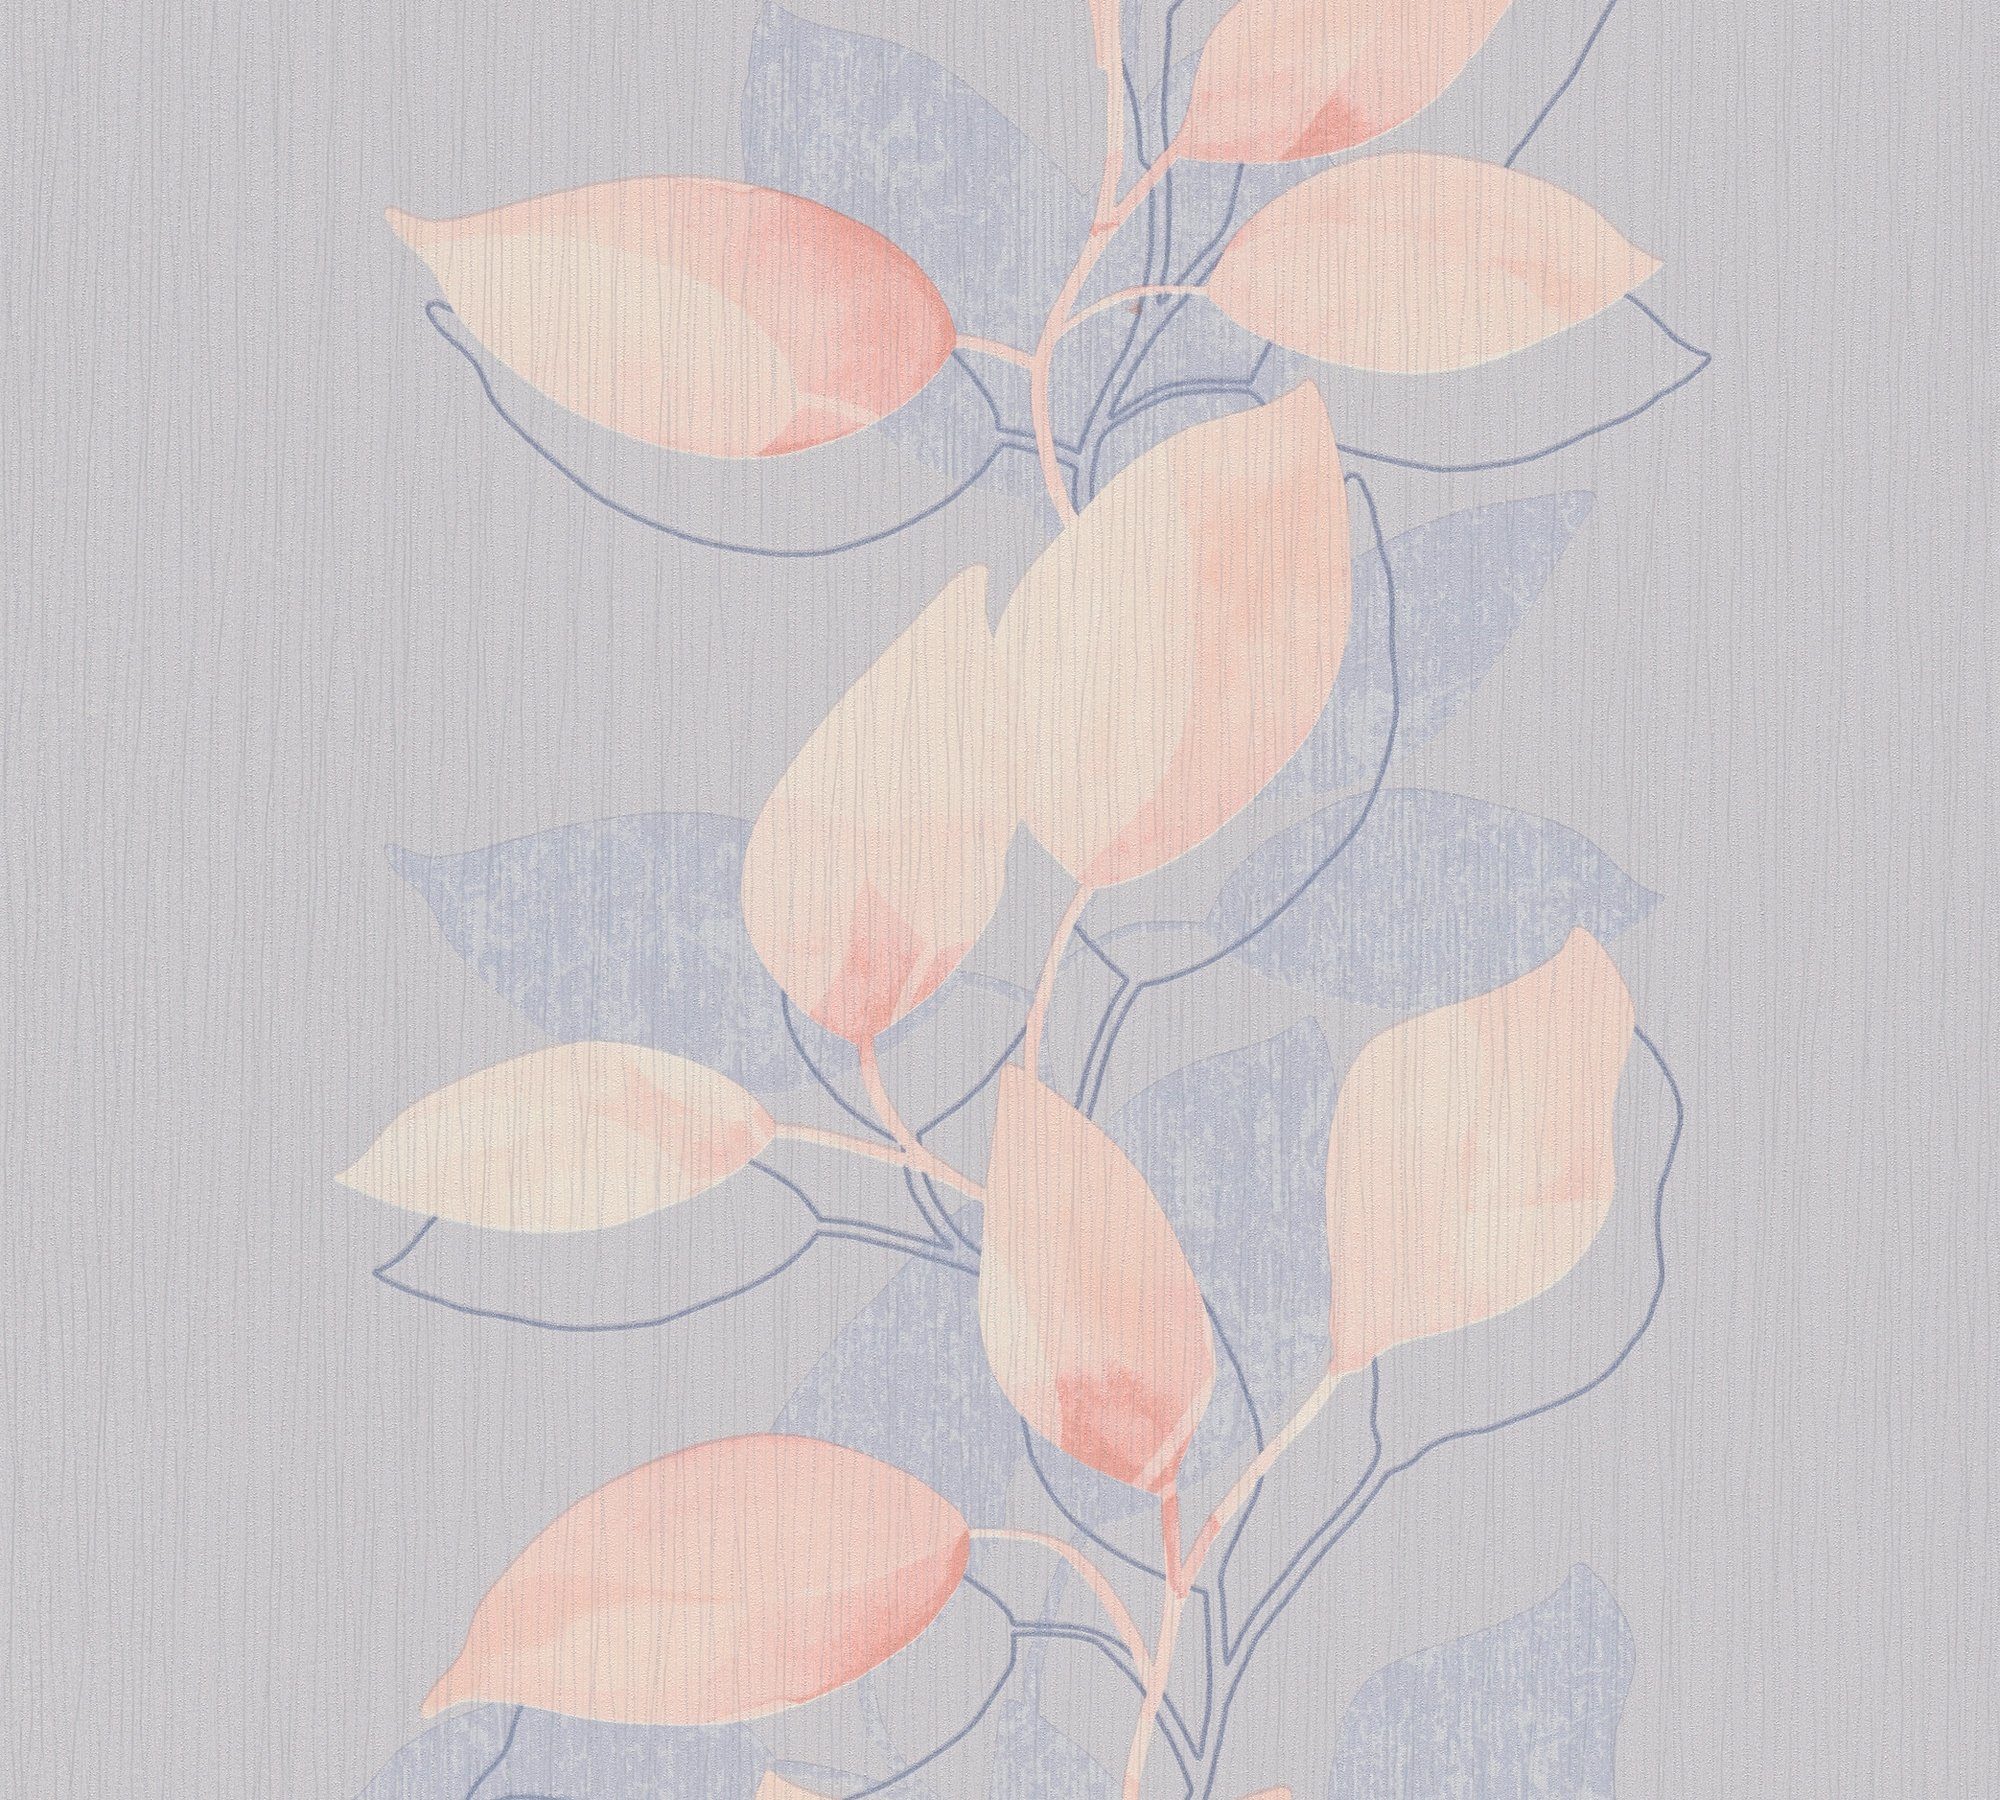 Vliestapete A.S. rosa/blau/grau Création botanisch, Tapete Attractive, floral, Blumen